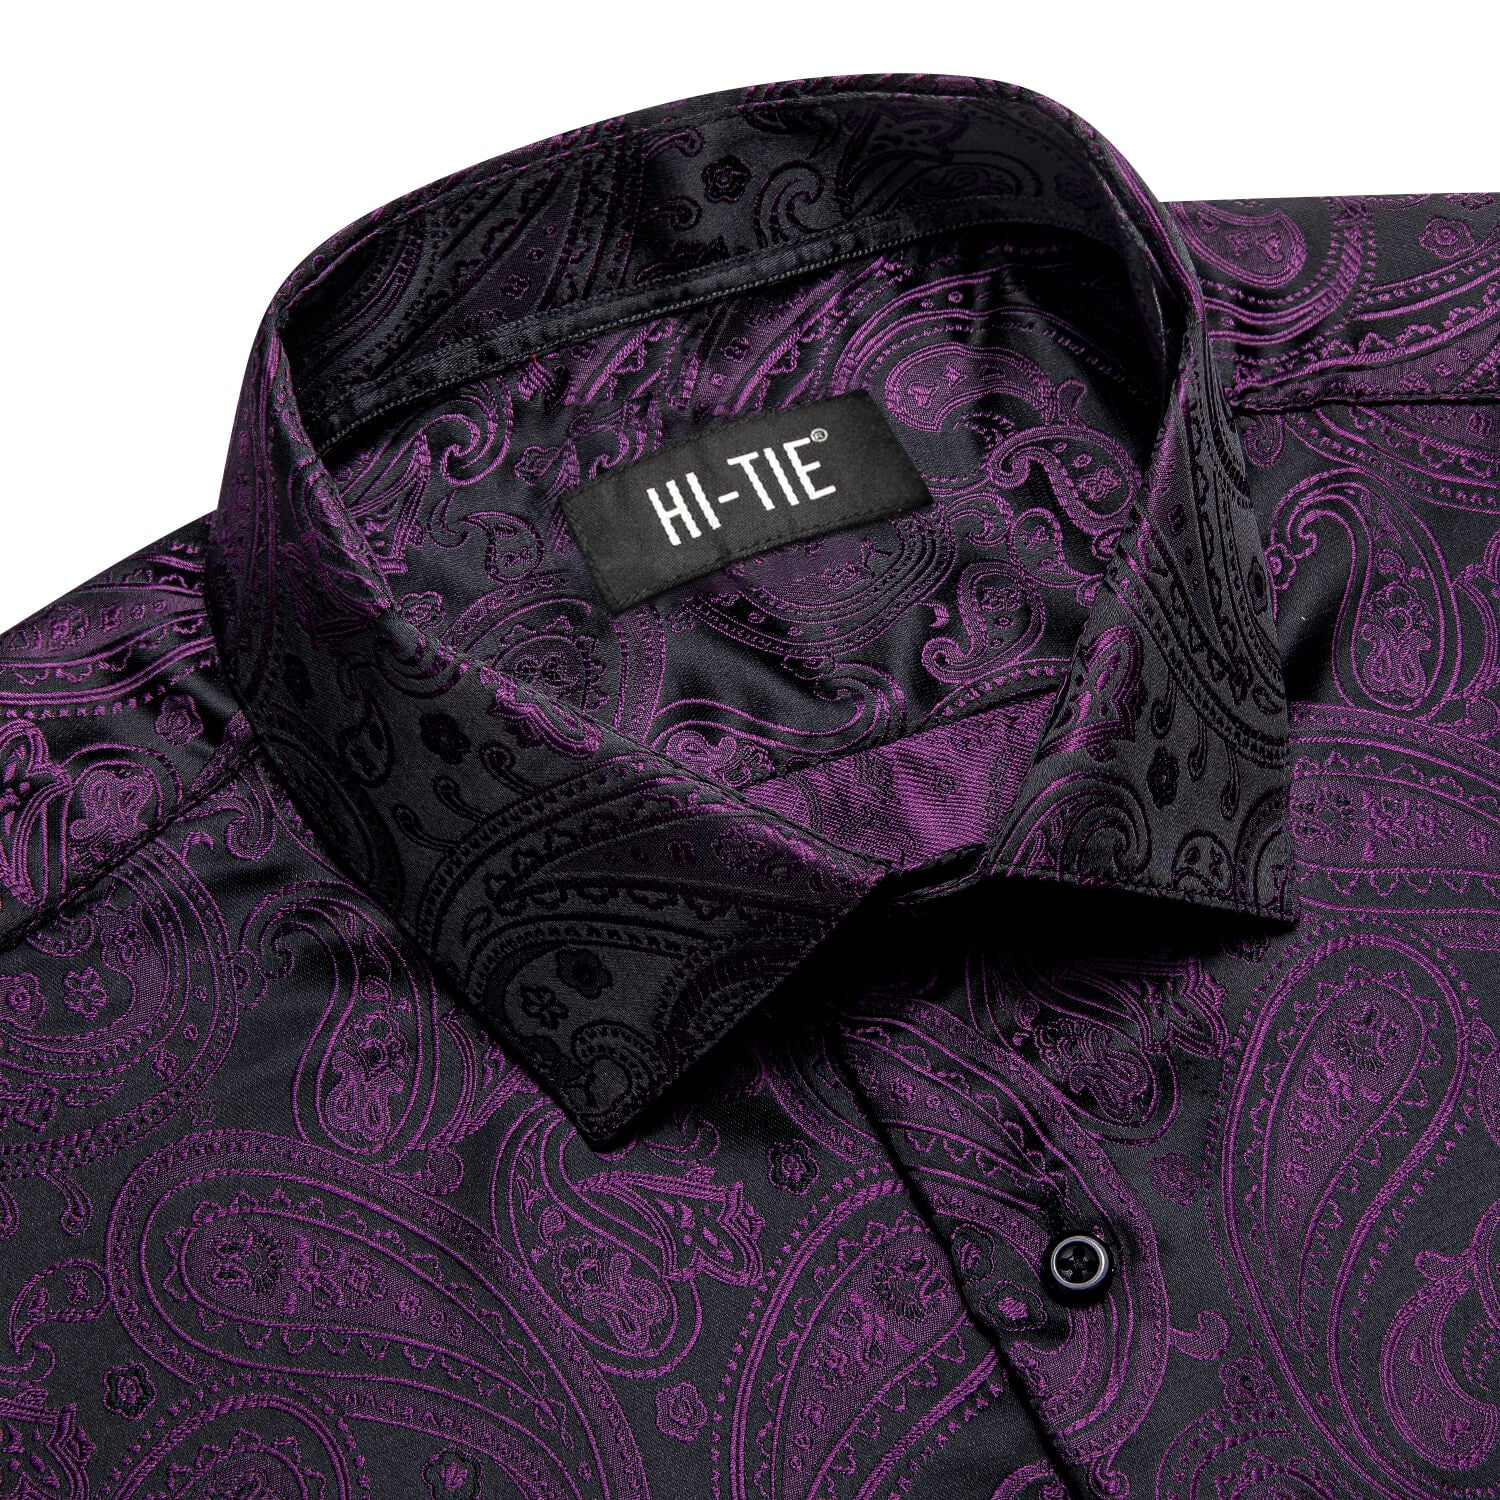 Hi-Tie Men's Shirt Dark Purple Jacquard Paisley Silk Long Sleeve Shirt